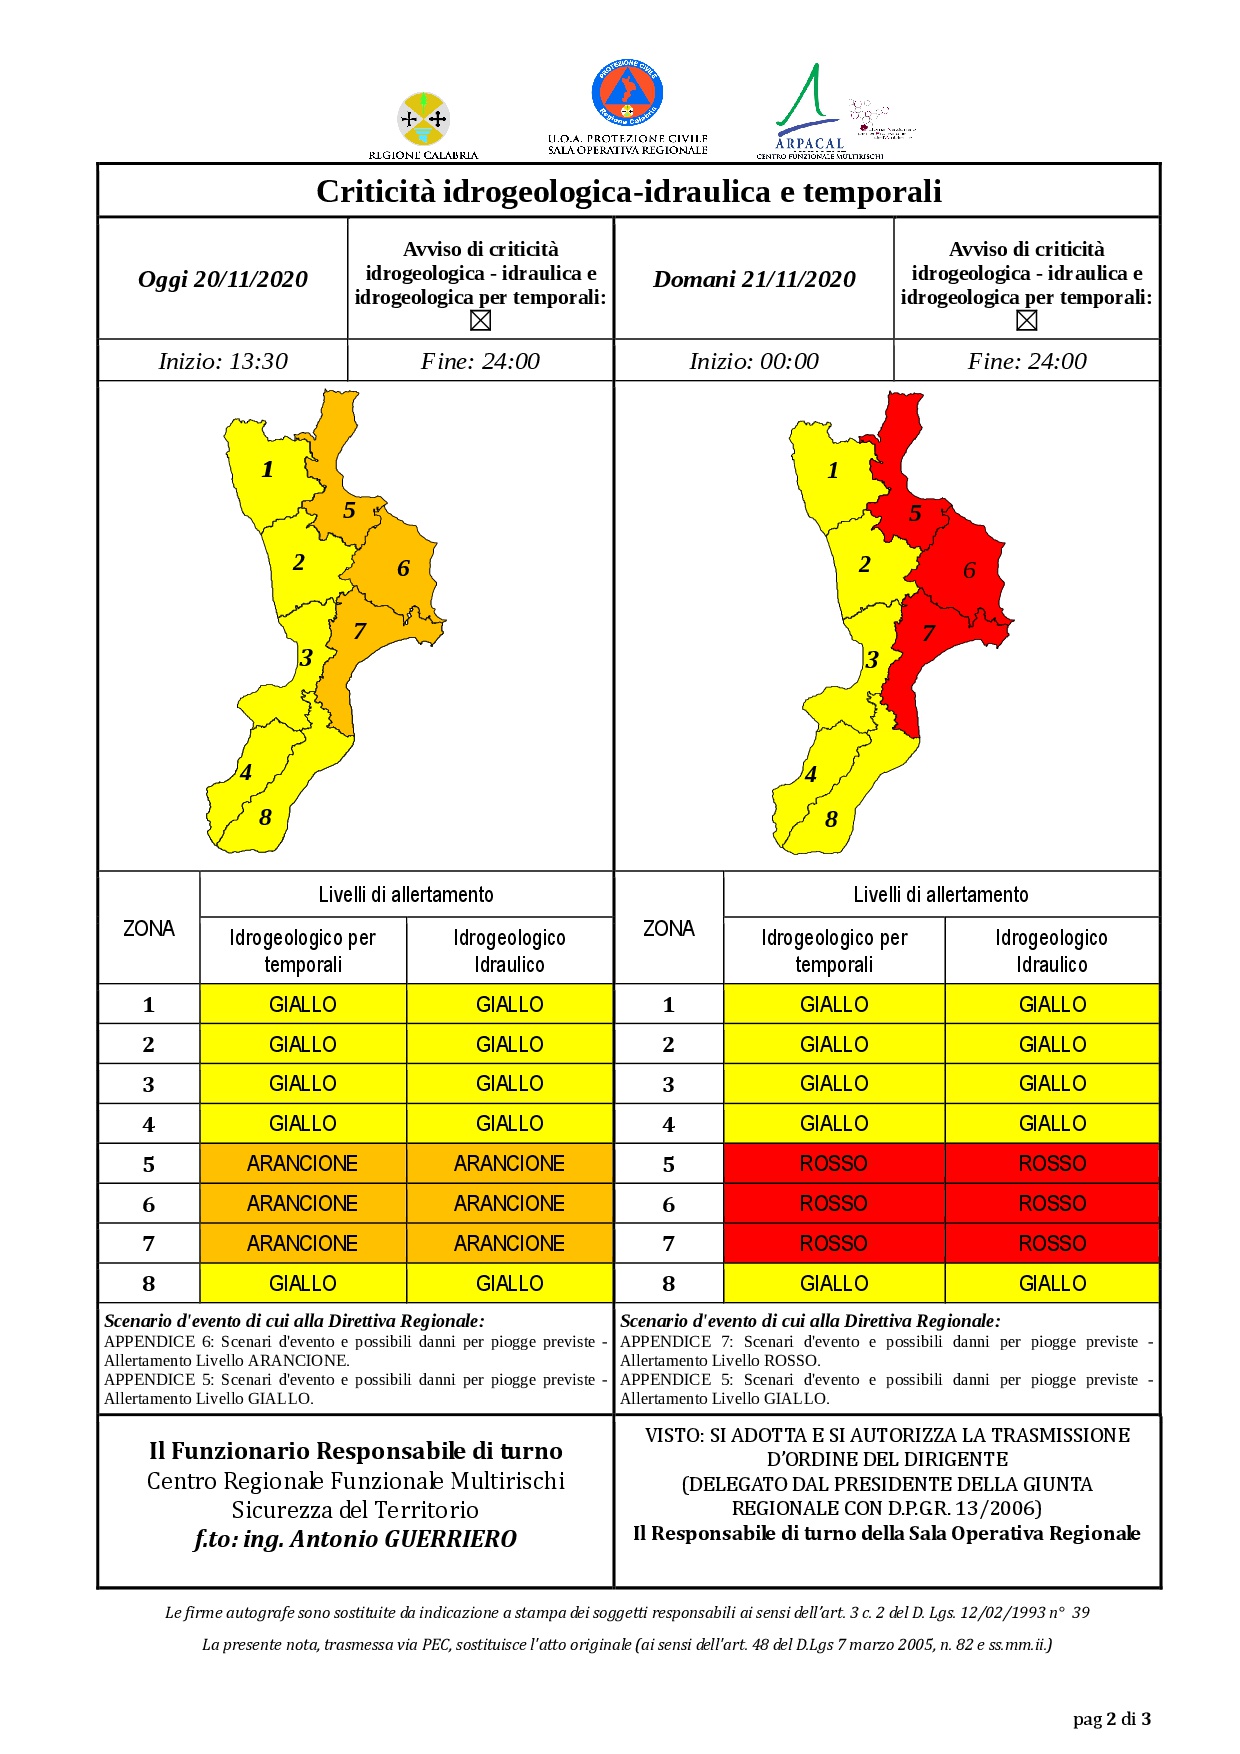 Criticità idrogeologica-idraulica e temporali in Calabria 20-11-2020